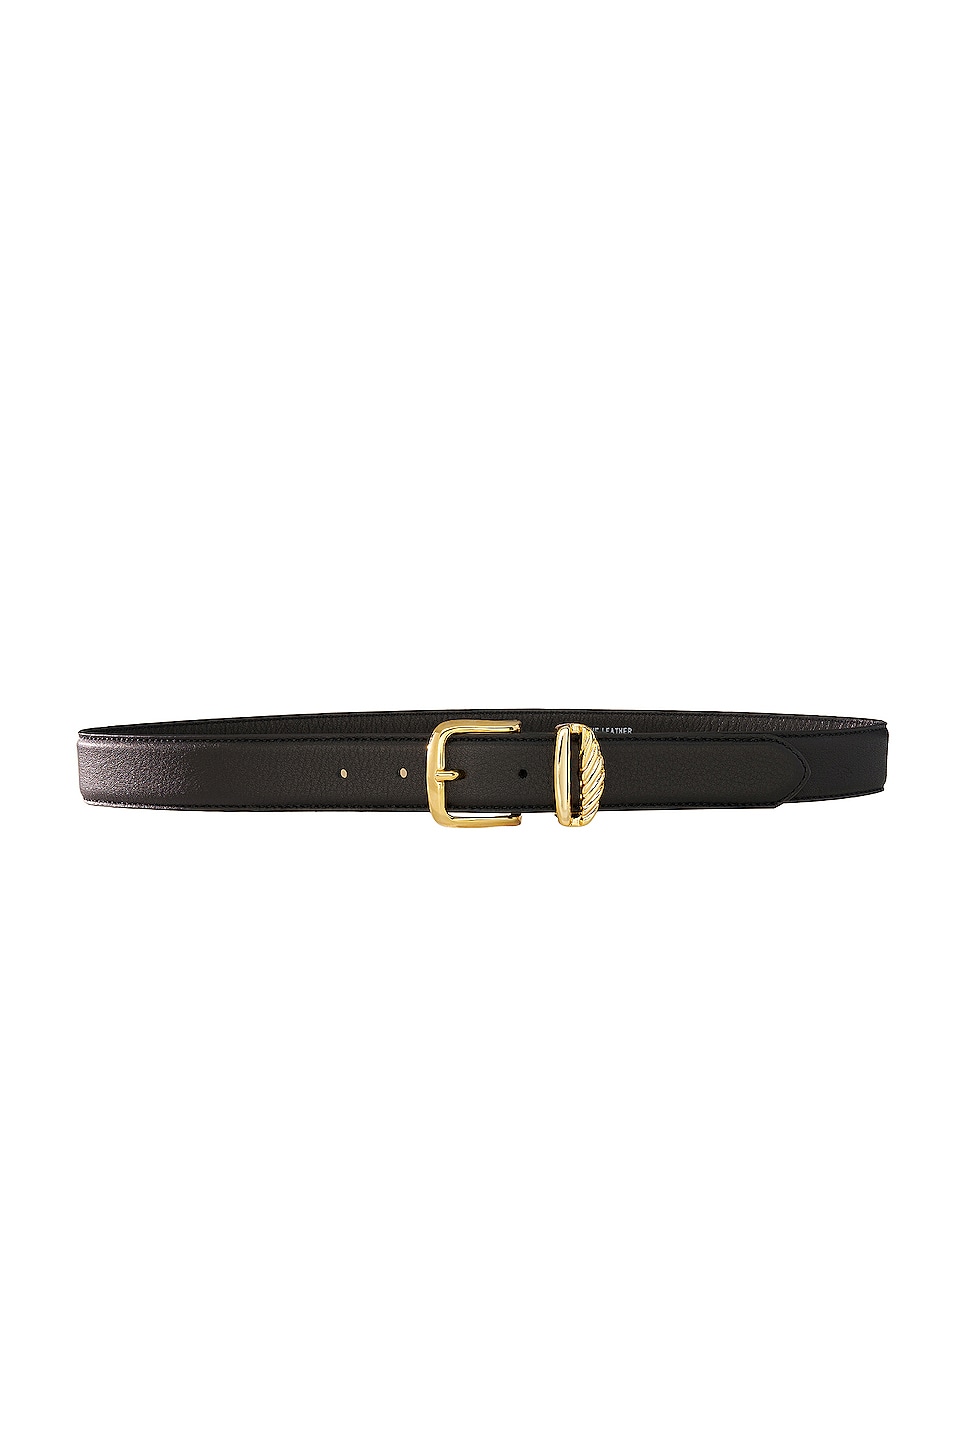 Black & Gold French Rope Belt in Black